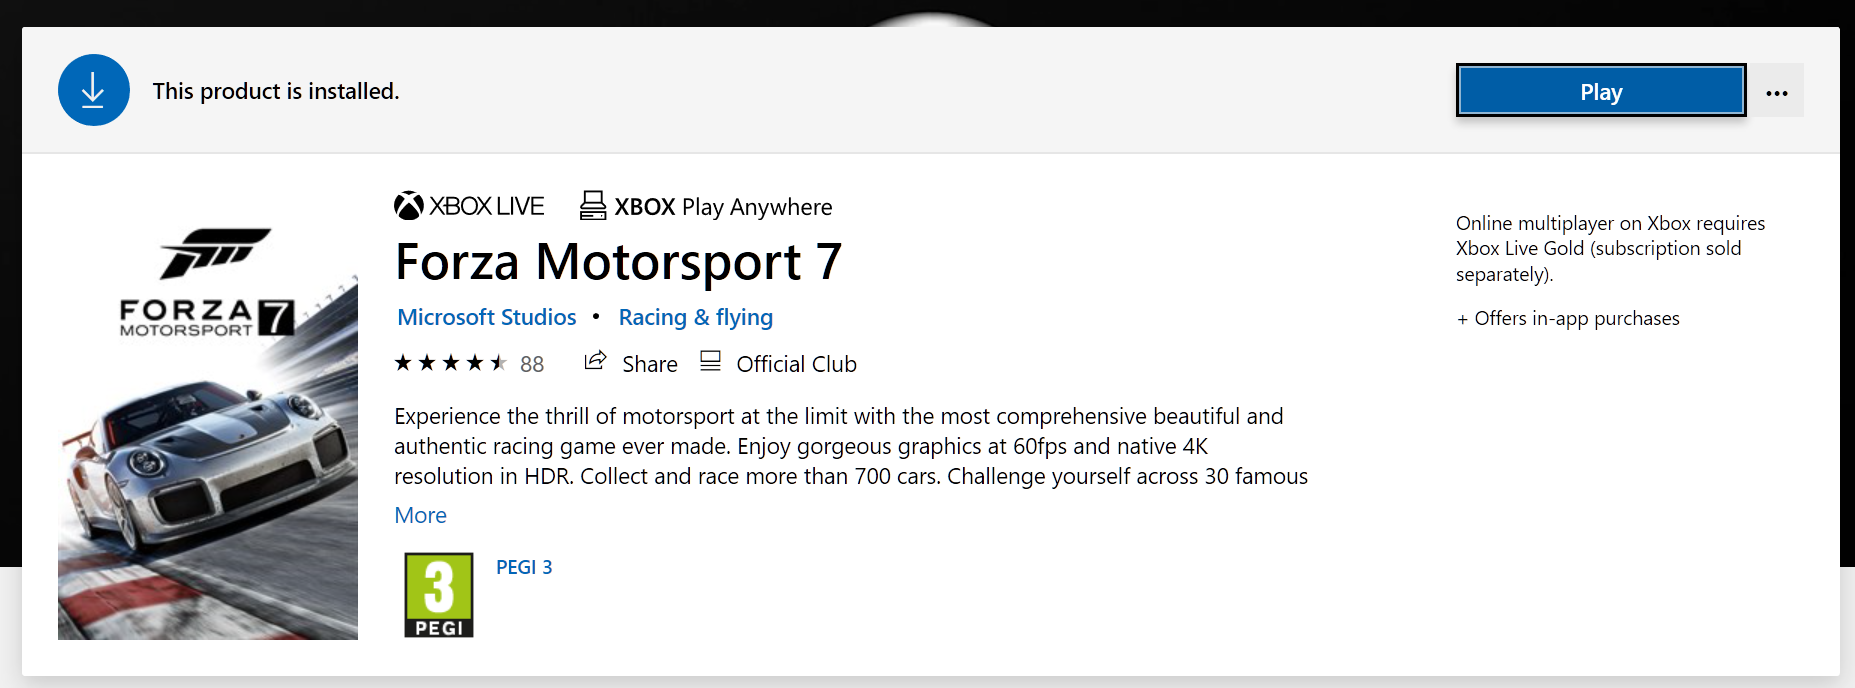 Forza Motorsport 7 install broken in Microsoft Store - need help! a2db3010-bbe4-47b0-8fe5-17ecdf678b0b?upload=true.png